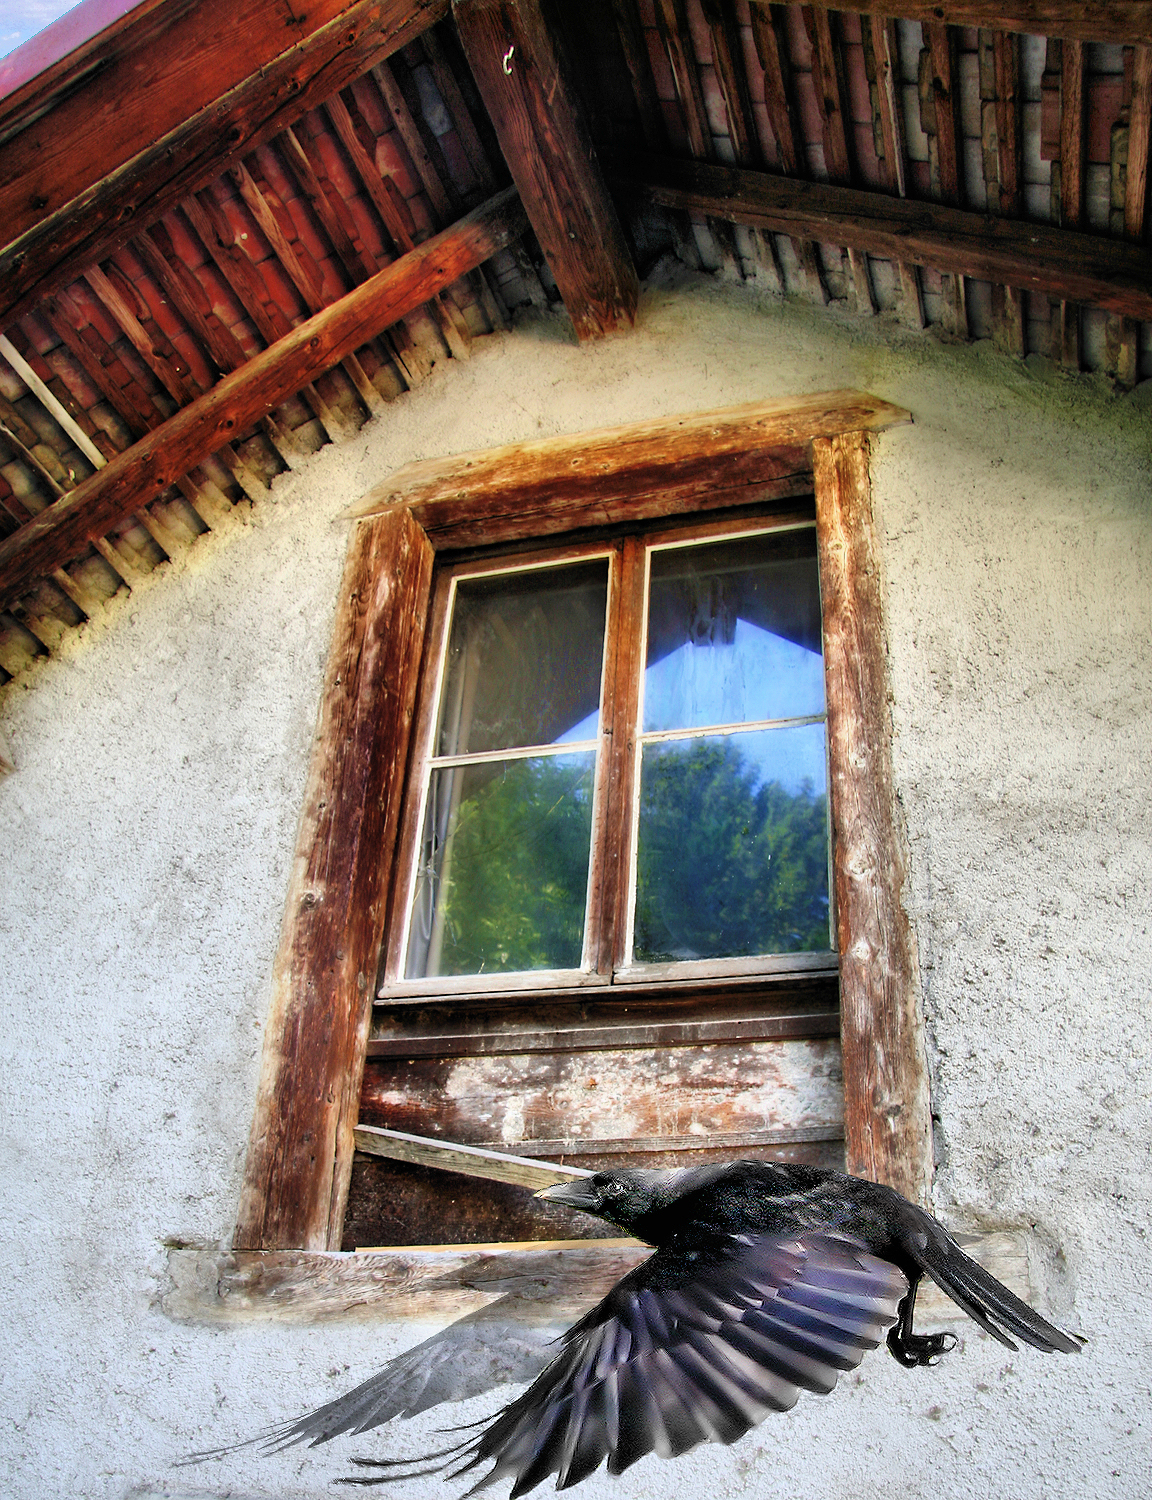 A secret shared between a window and a rook...